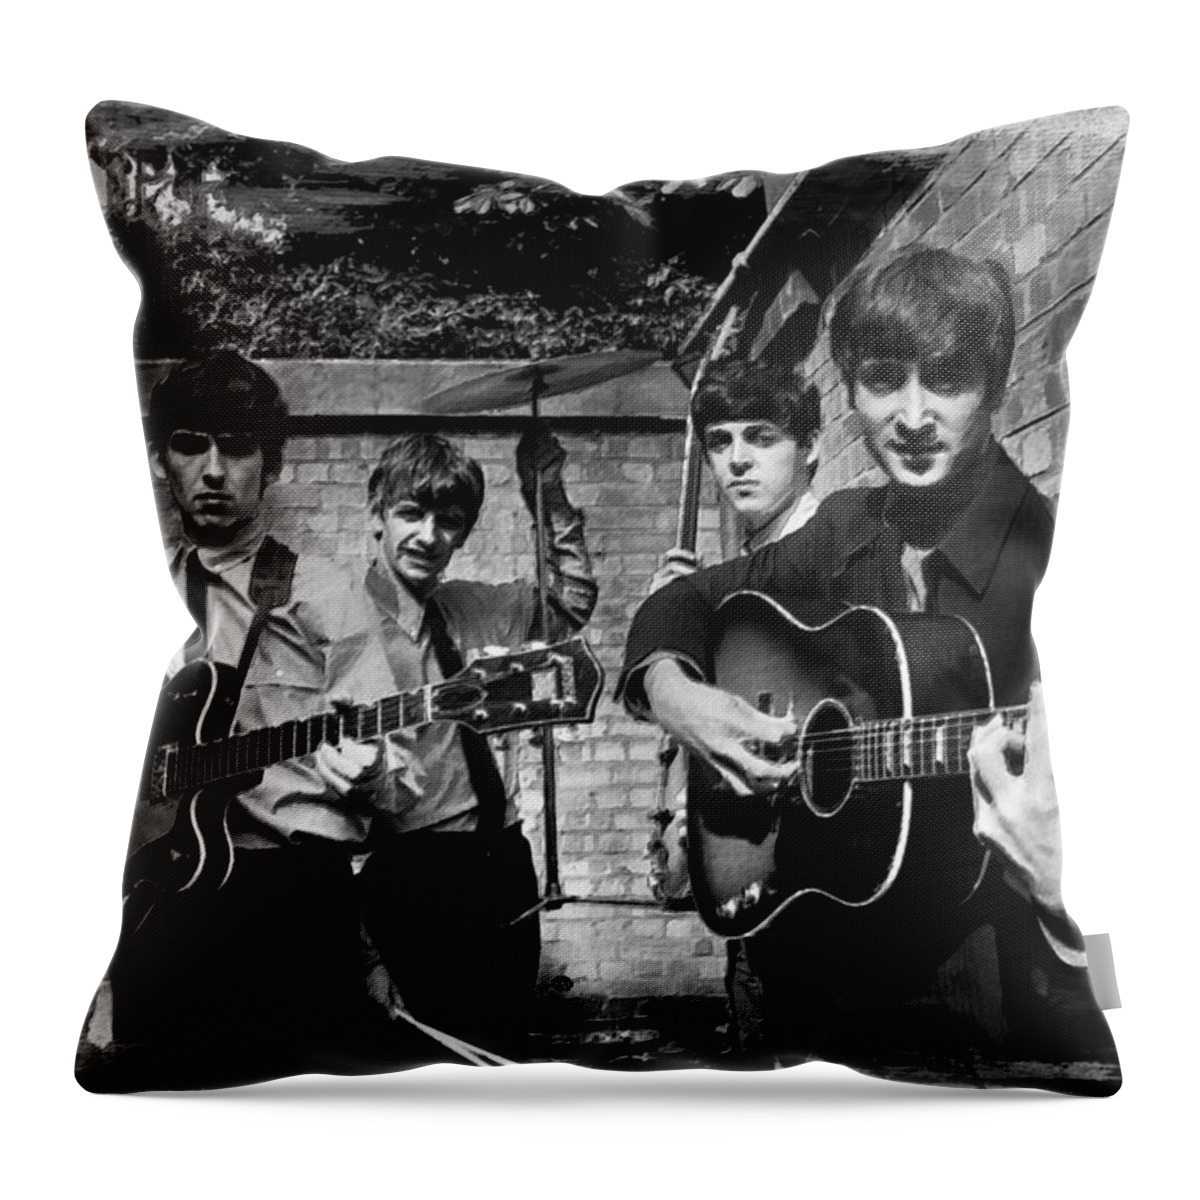 The Beatles Throw Pillow featuring the painting The Beatles In London 1963 Black And White Painting by Tony Rubino